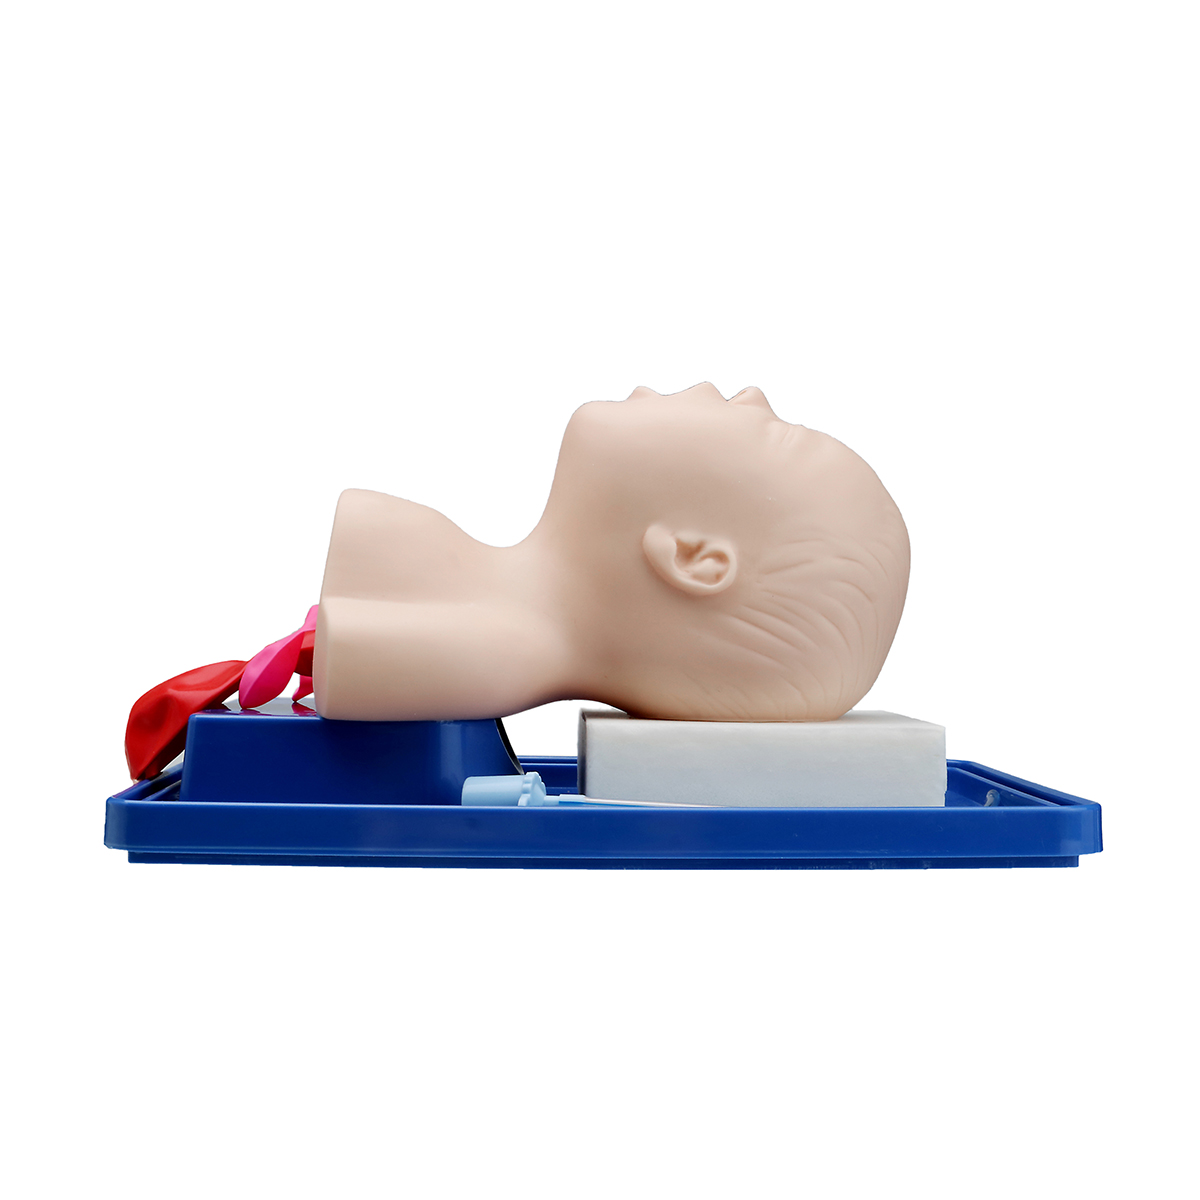 Intubation Manikin Study Teaching Model Baby Infant Airway Management Trainer Medical Model 12